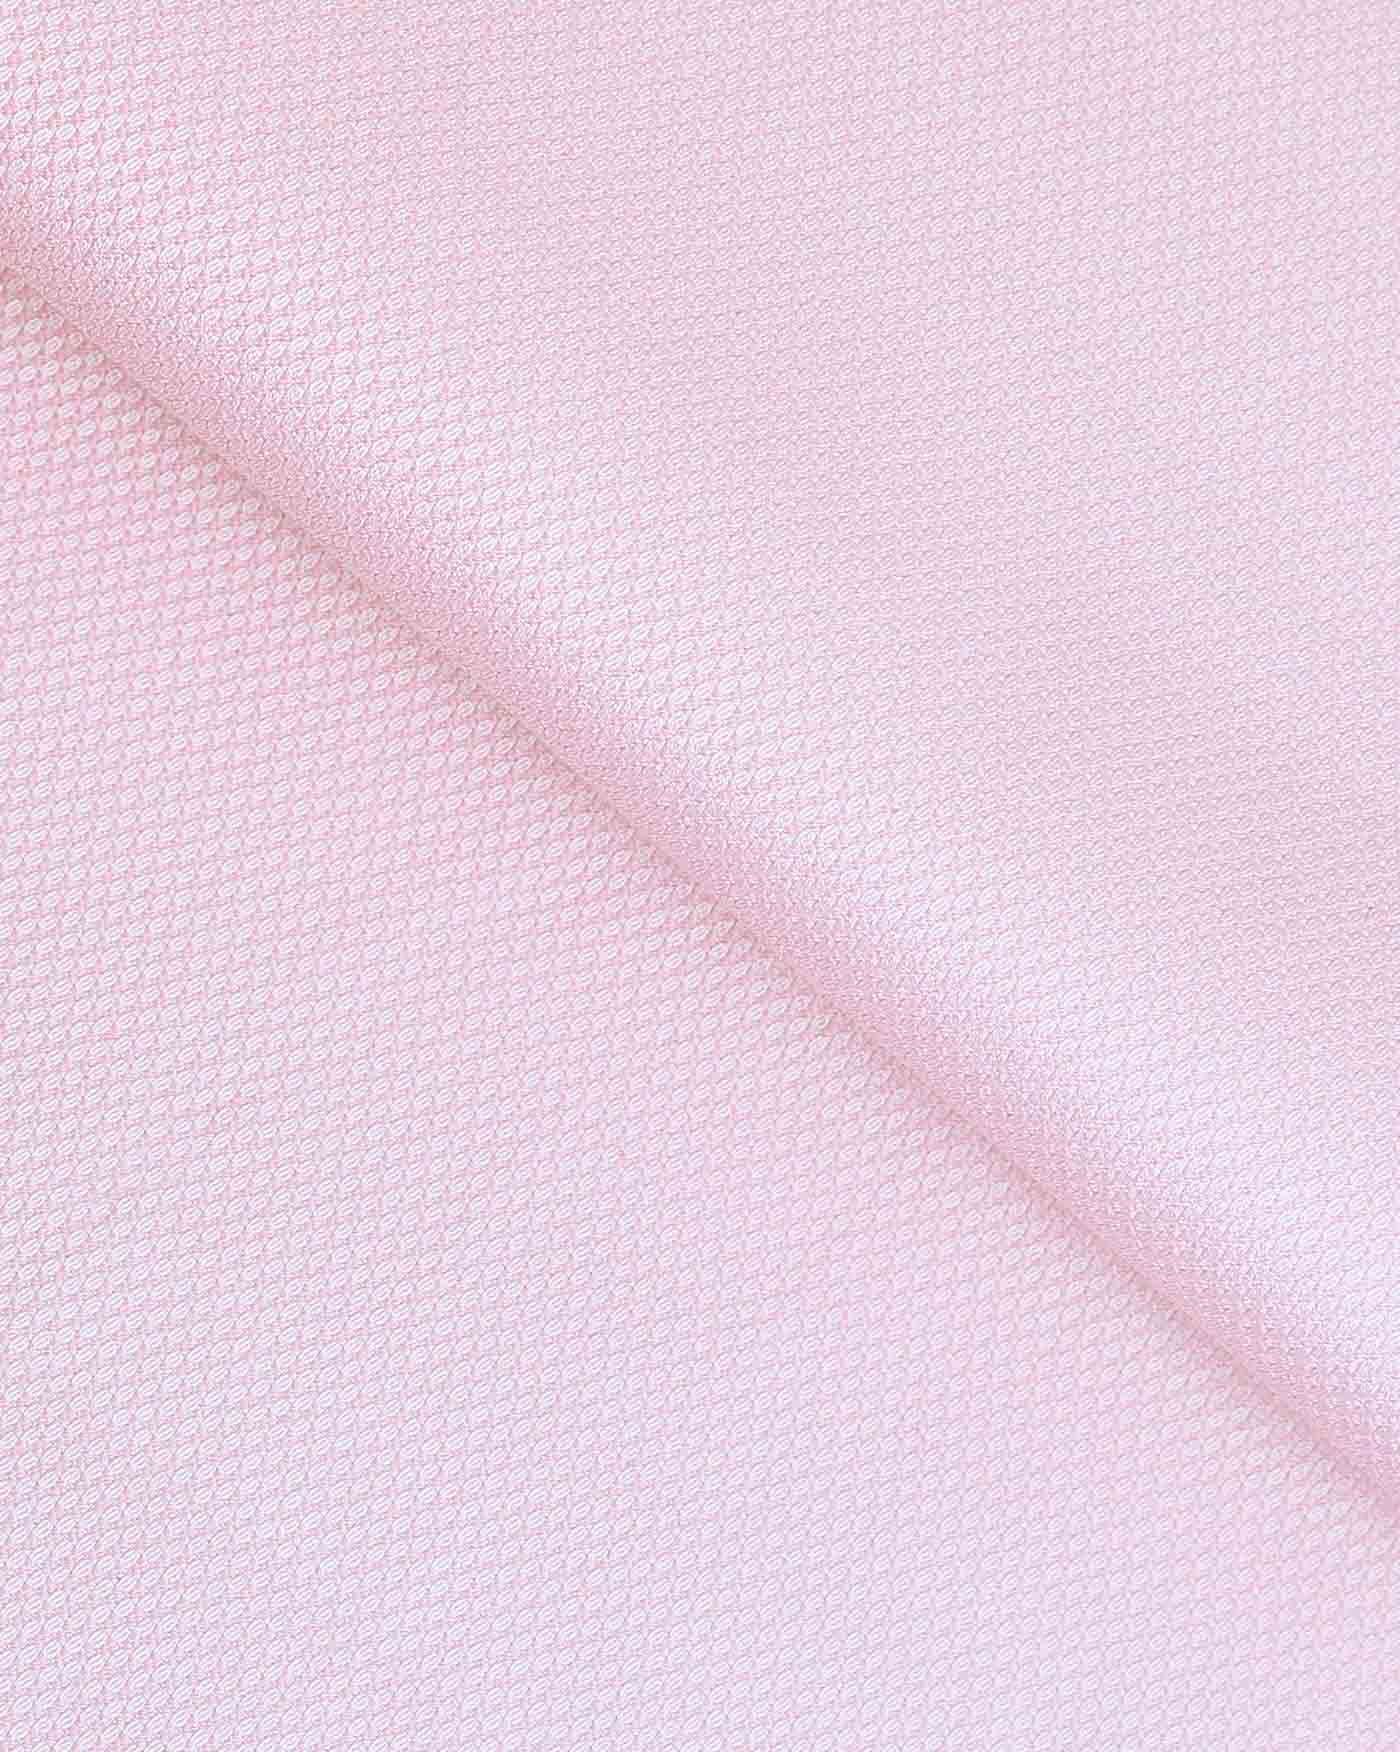 Monti Pink Soufflé Dobby Shirt